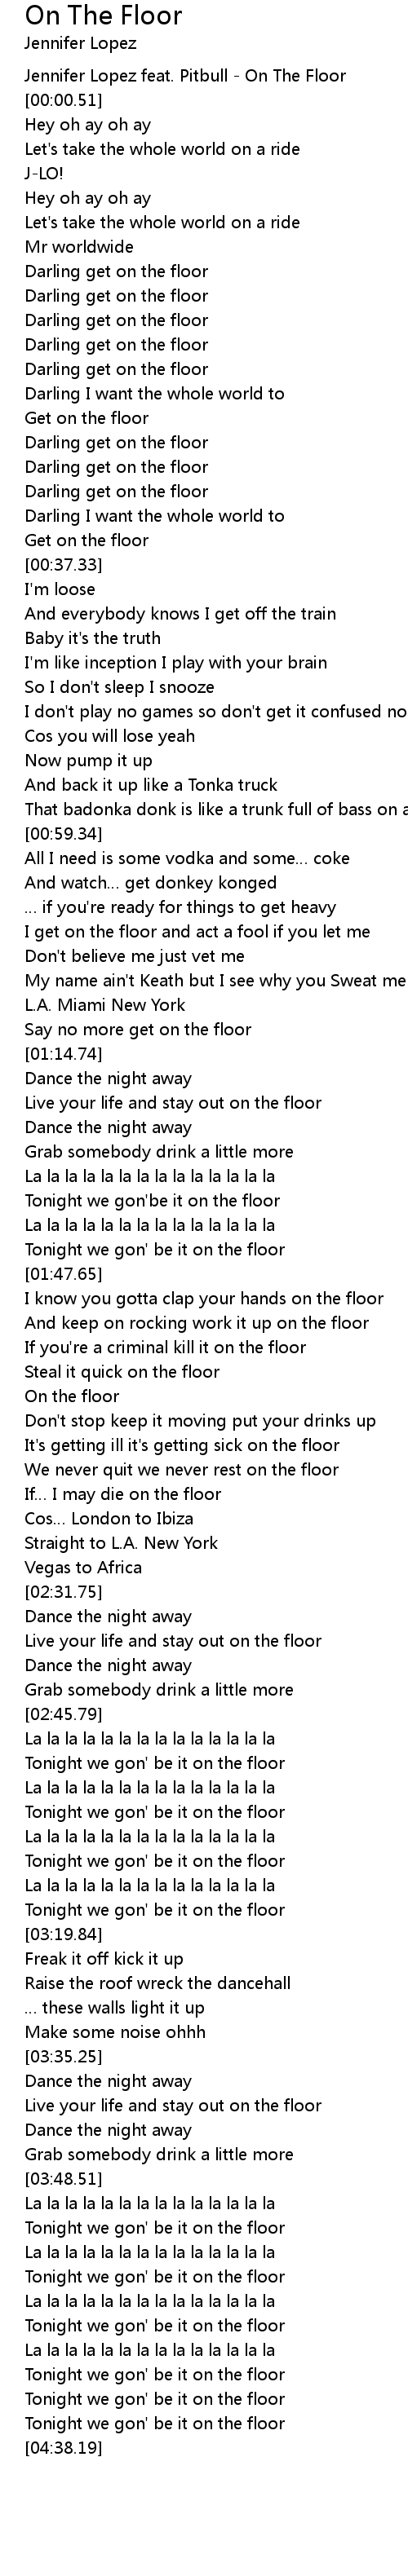 On The Floor Lyrics Follow Lyrics